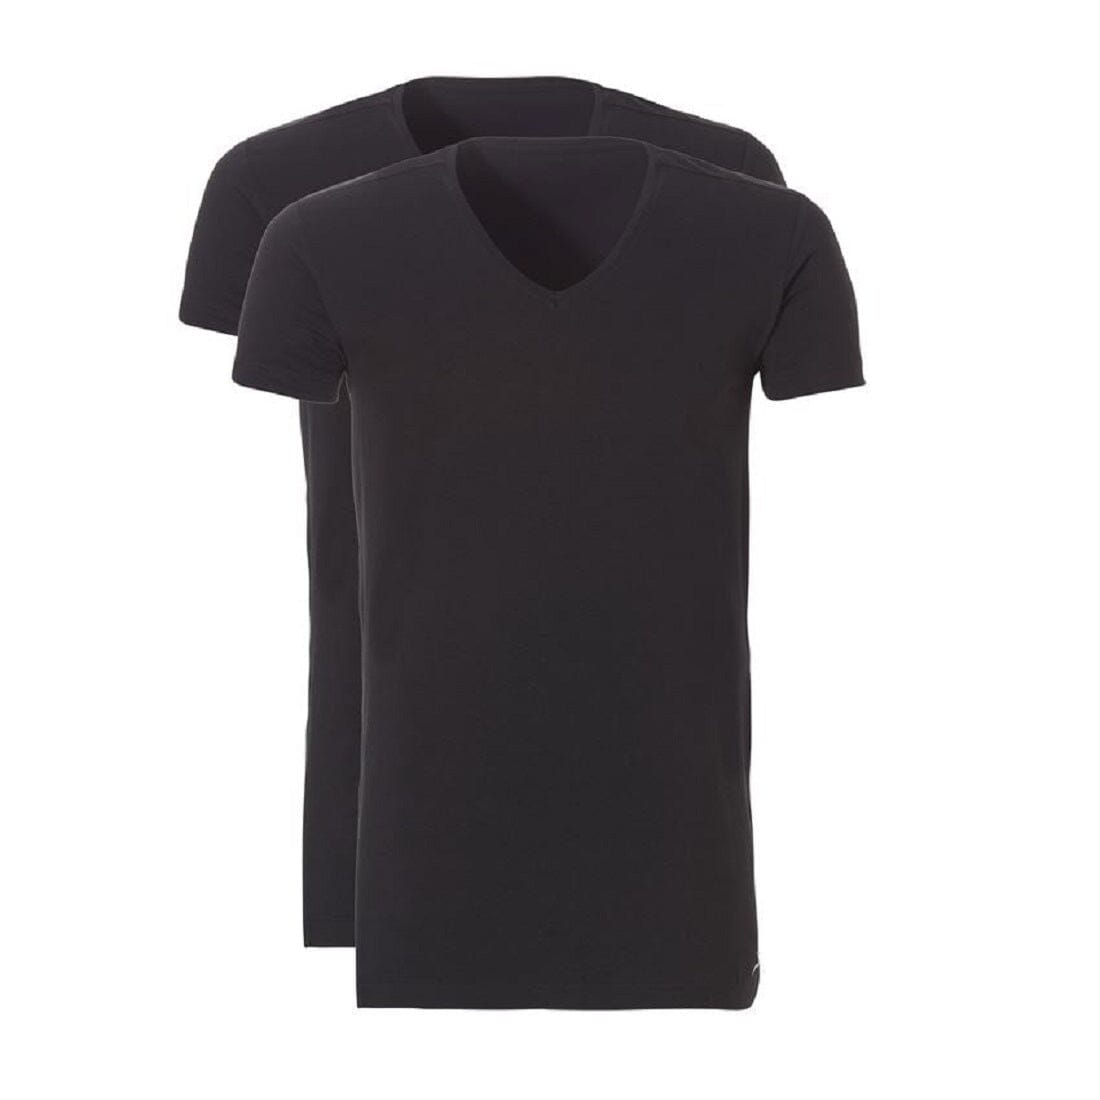 Ten Cate - 30847 - Basic V-Shirt Long 2-pack - Black Shirt Ten Cate 